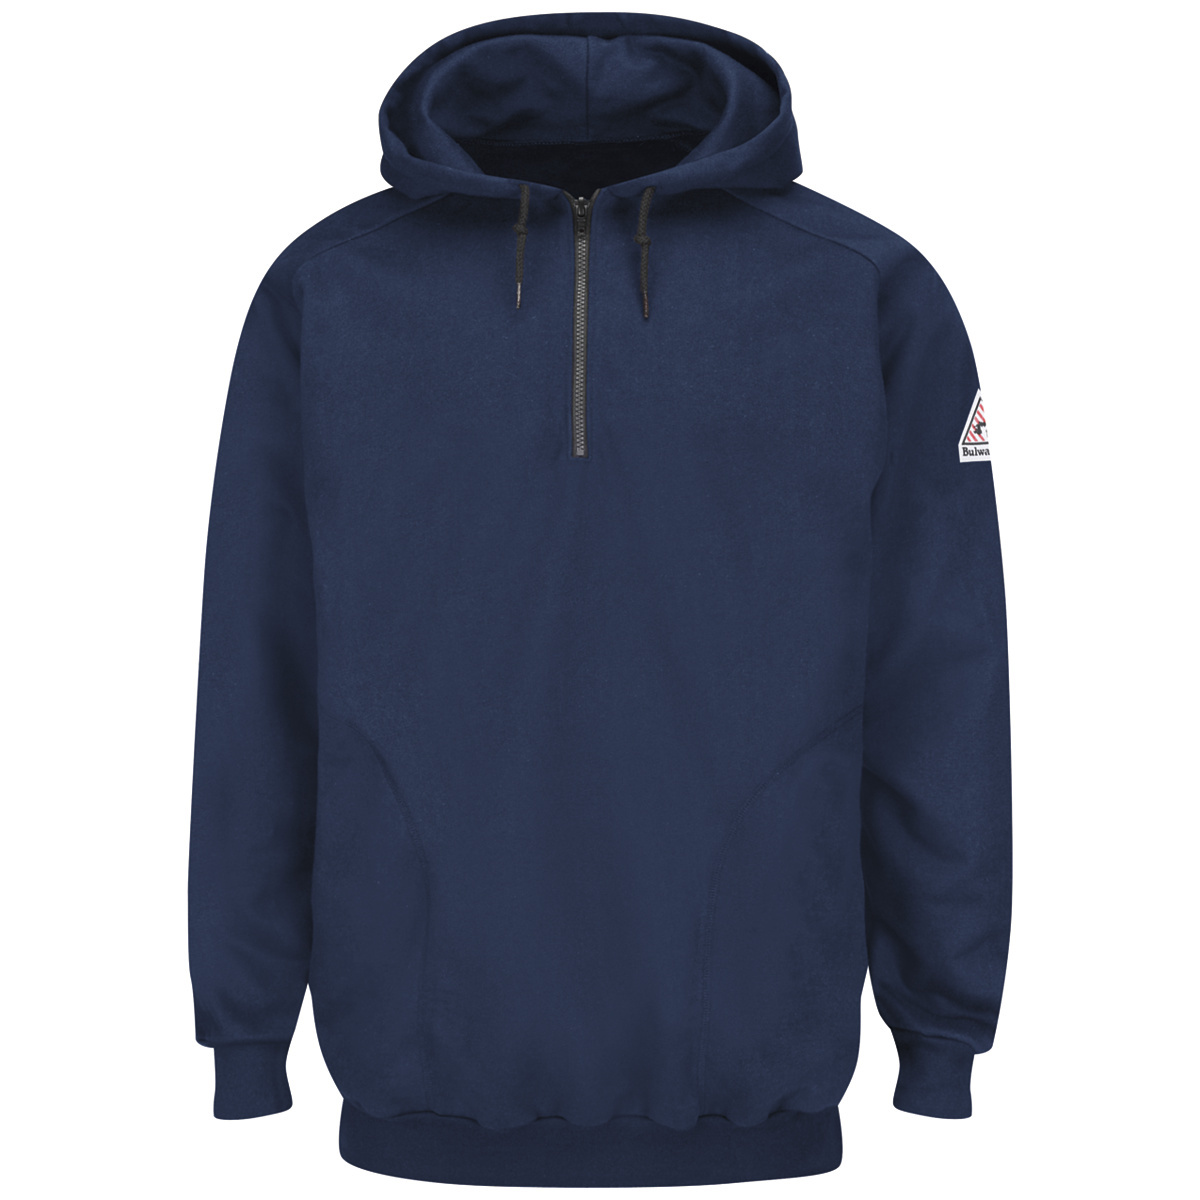 Bulwark® Medium Tall Navy Blue Cotton/Spandex Brushed Fleece Flame Resistant Hooded Sweatshirt